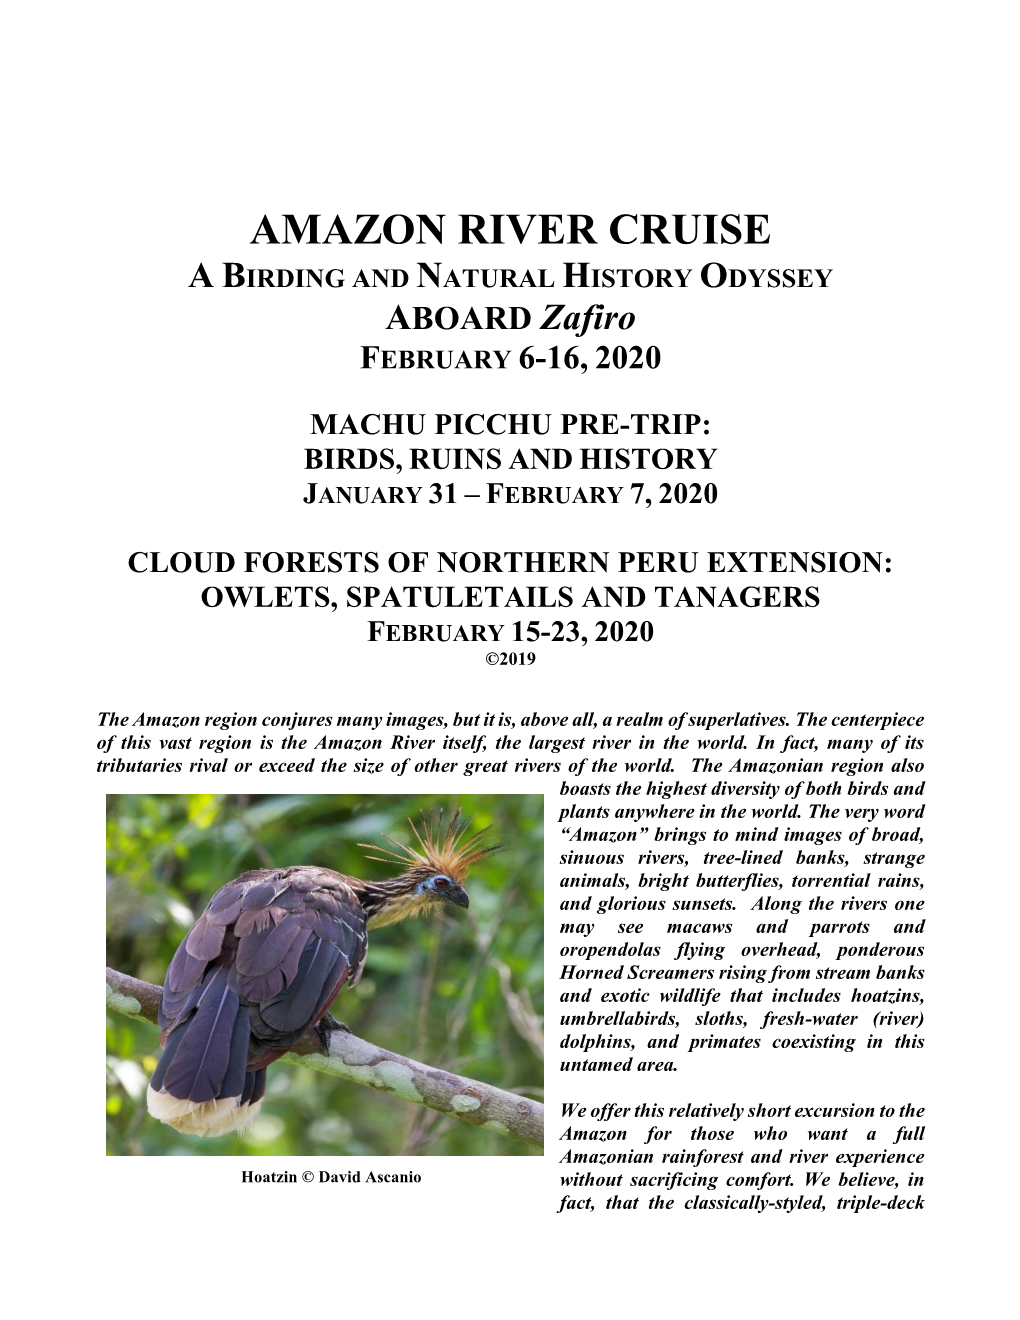 AMAZON RIVER CRUISE a BIRDING and NATURAL HISTORY ODYSSEY ABOARD Zafiro FEBRUARY 6-16, 2020